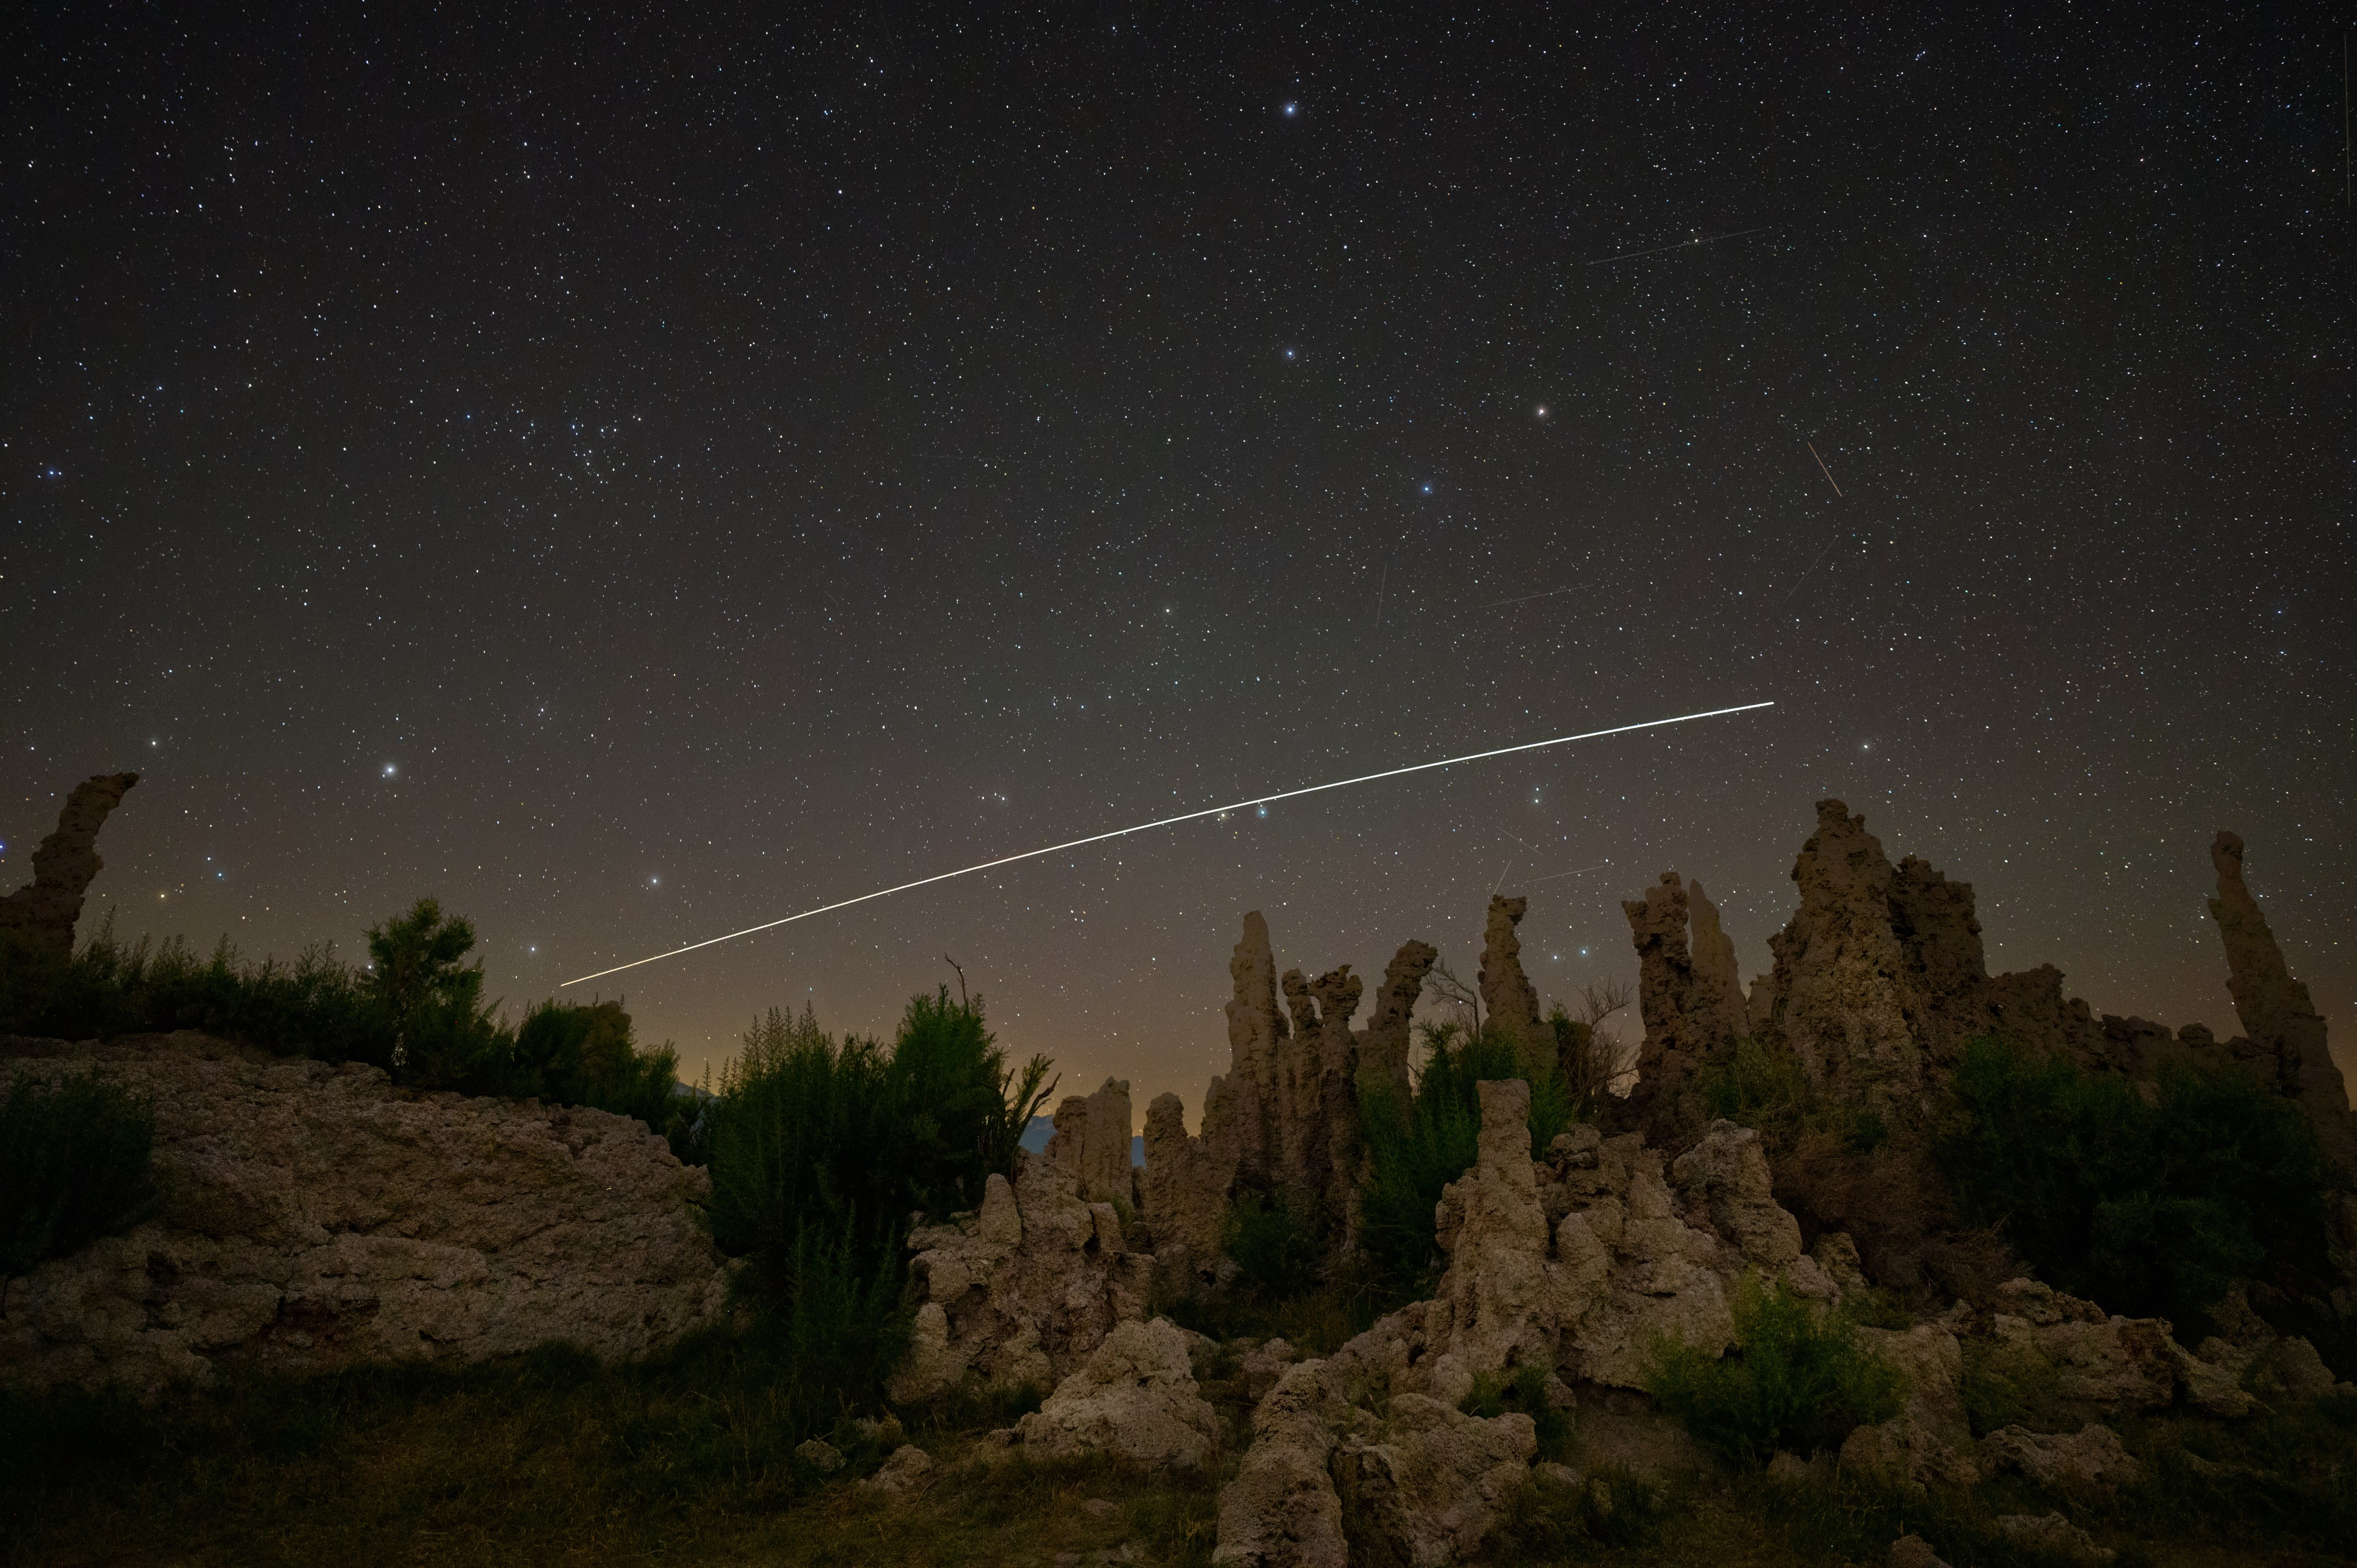 The International Space Station leaves a streak of light over a desert twilight landscape.